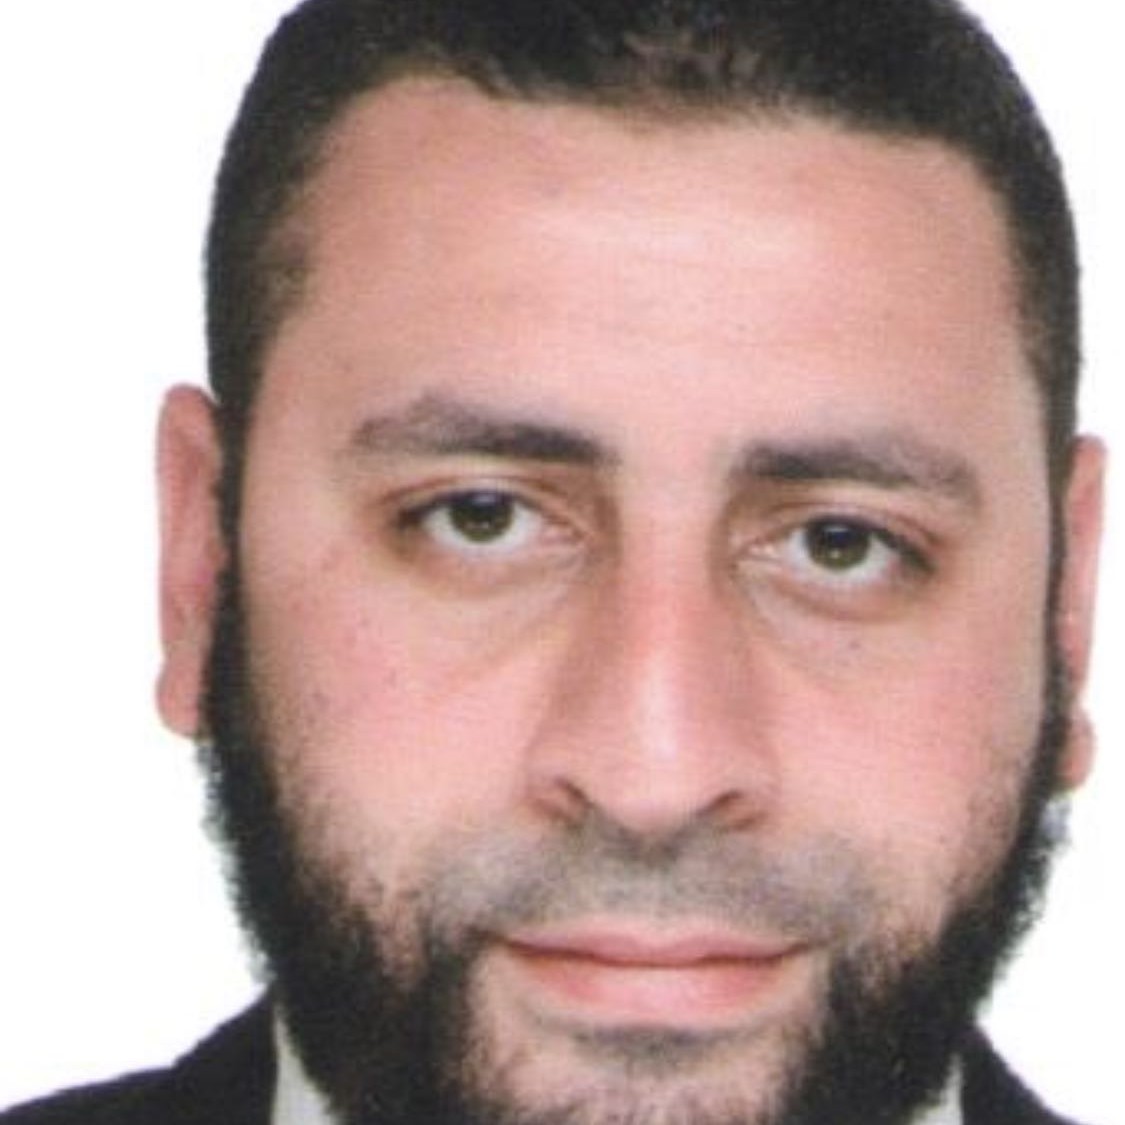 Dr. Mahmoud Abdelwahab